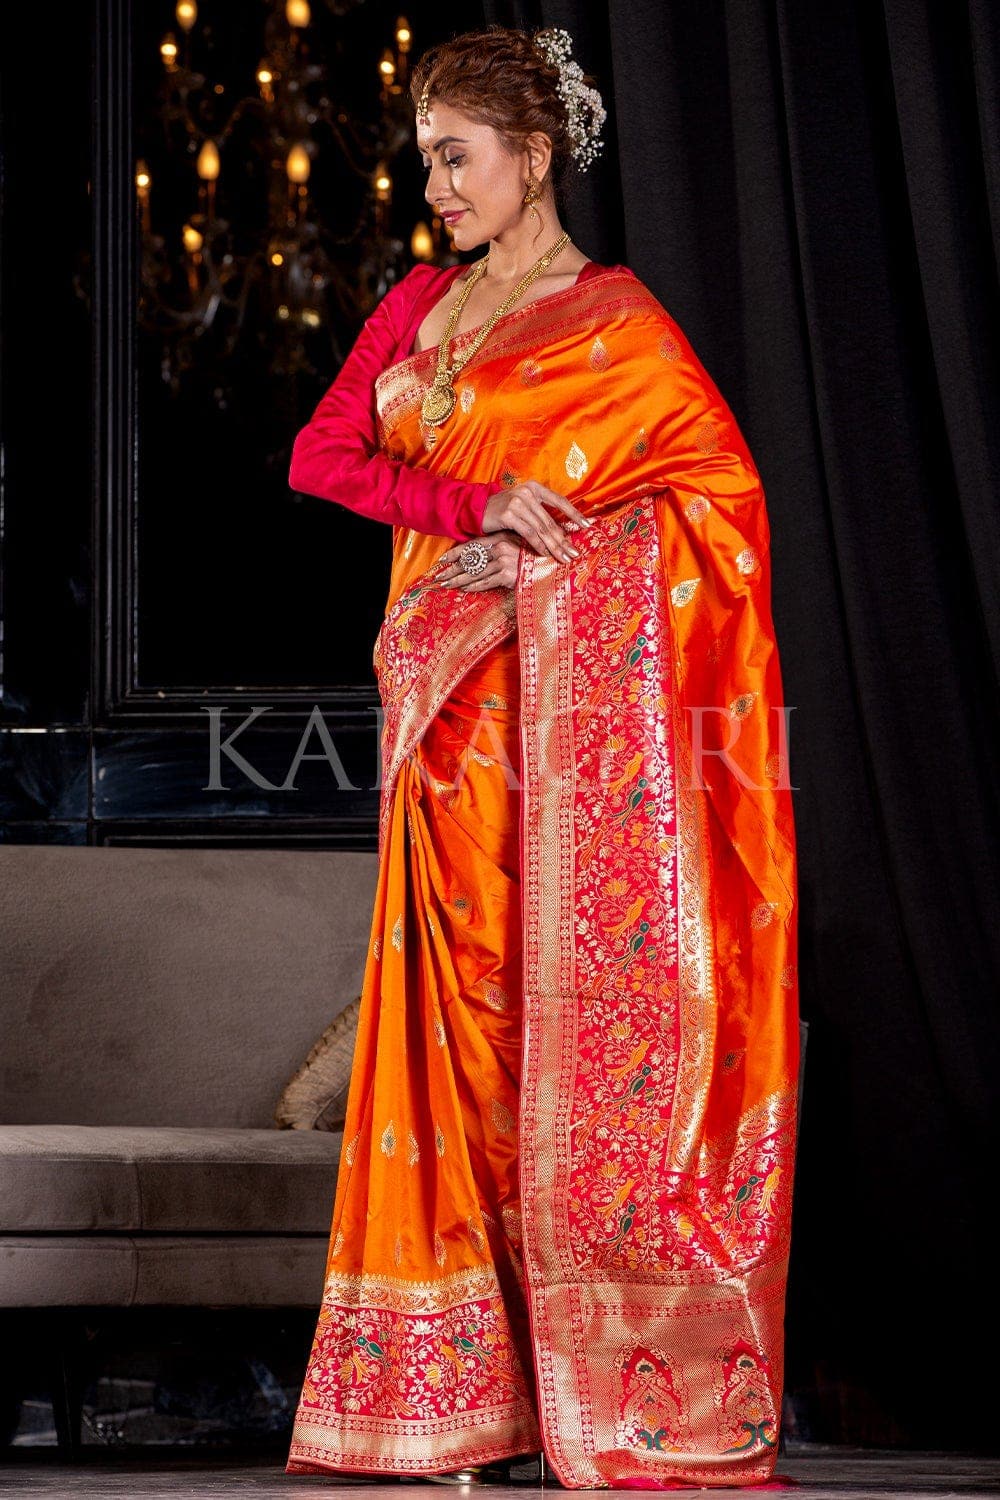 Lite Orange color Banarasi sarees with all over zig zag design -BANS0006000